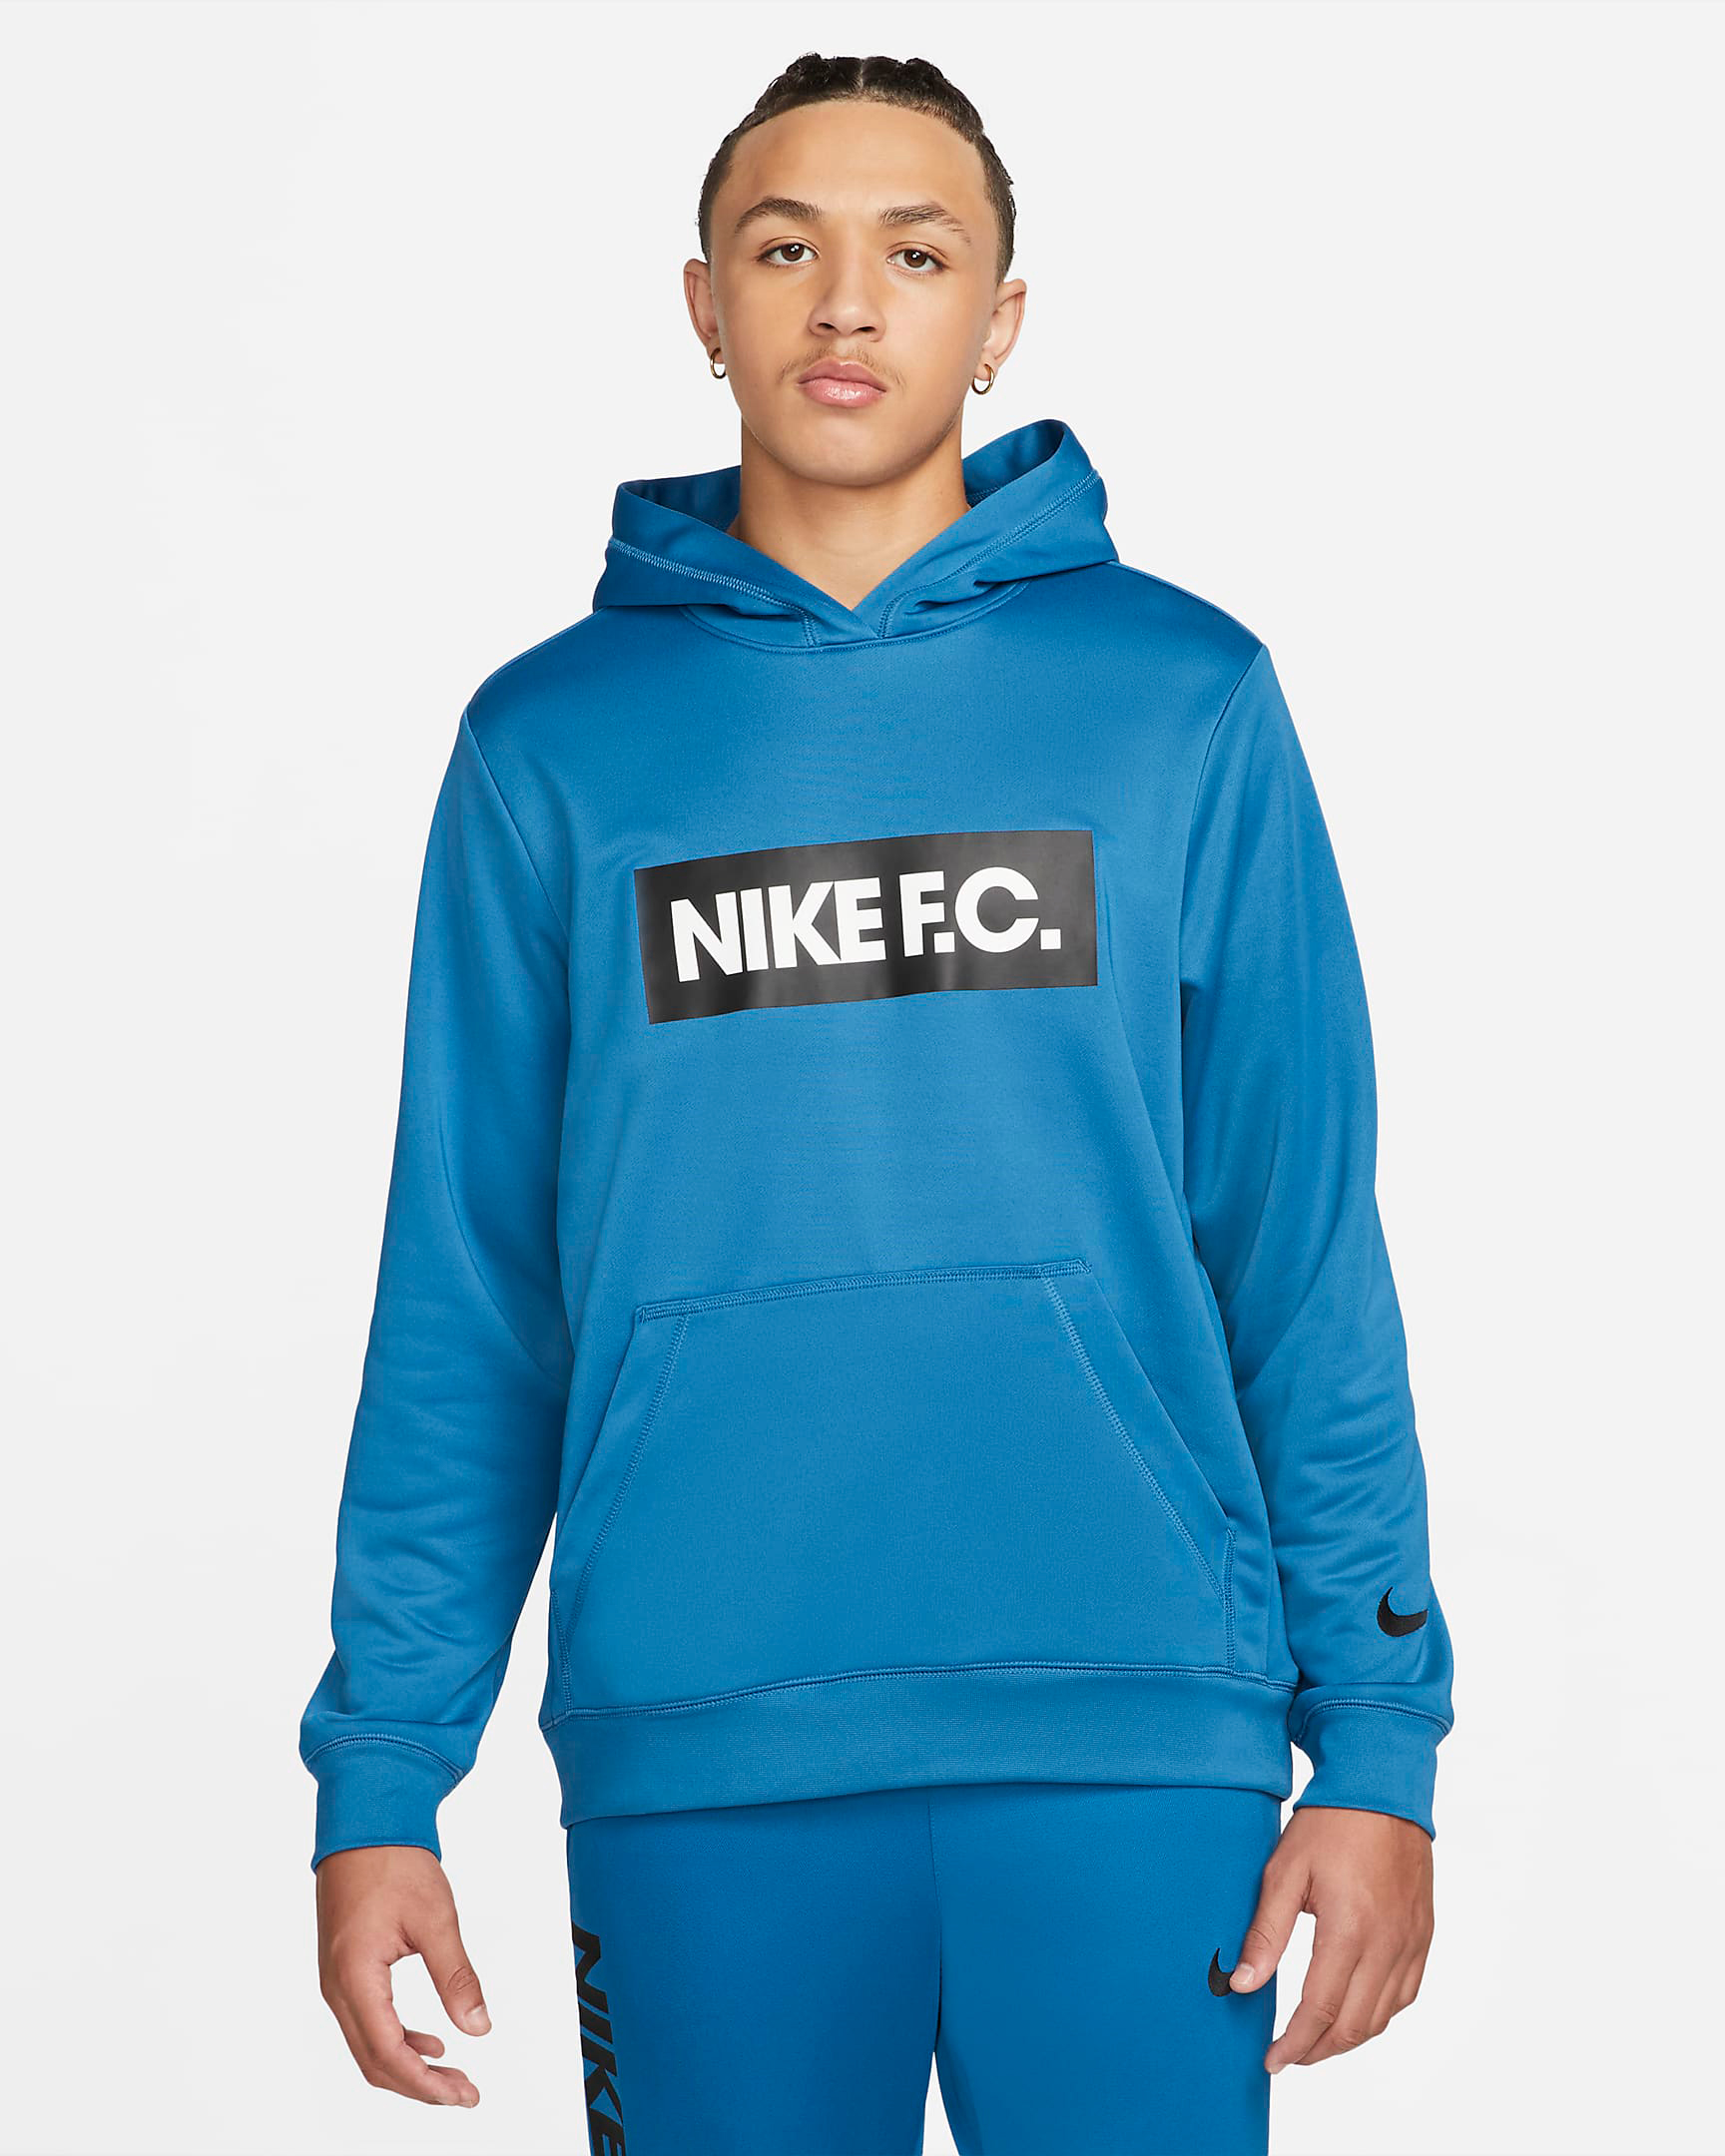 nike-fc-hoodie-dark-marina-blue